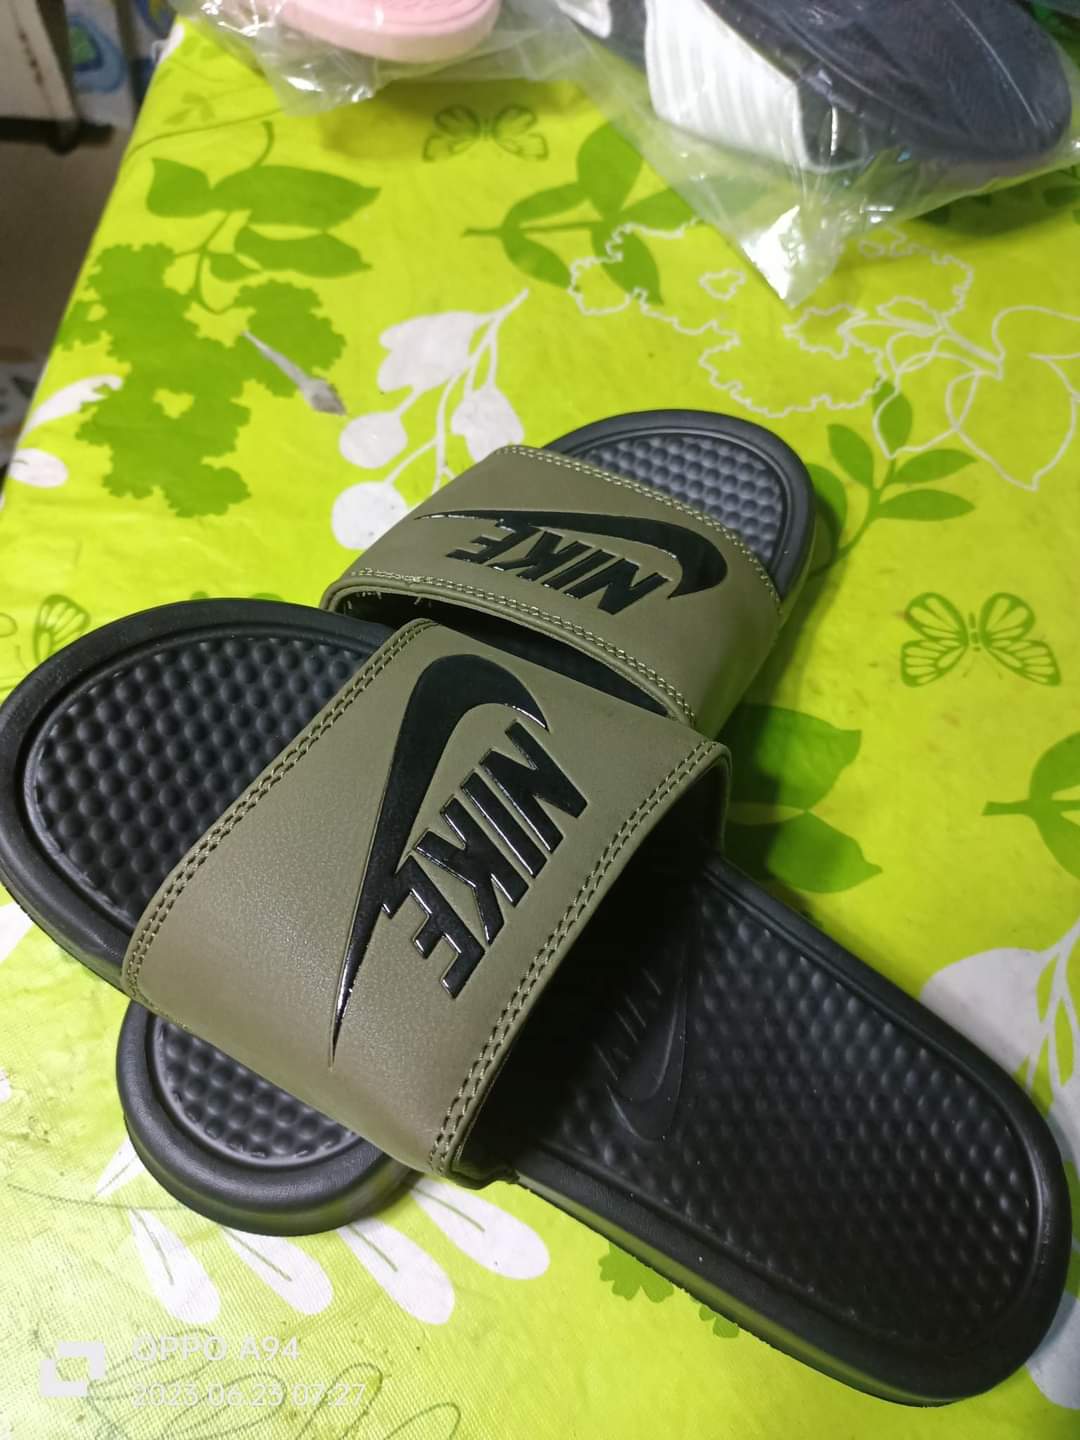 Original Nike slippers | Shopee Philippines-thanhphatduhoc.com.vn